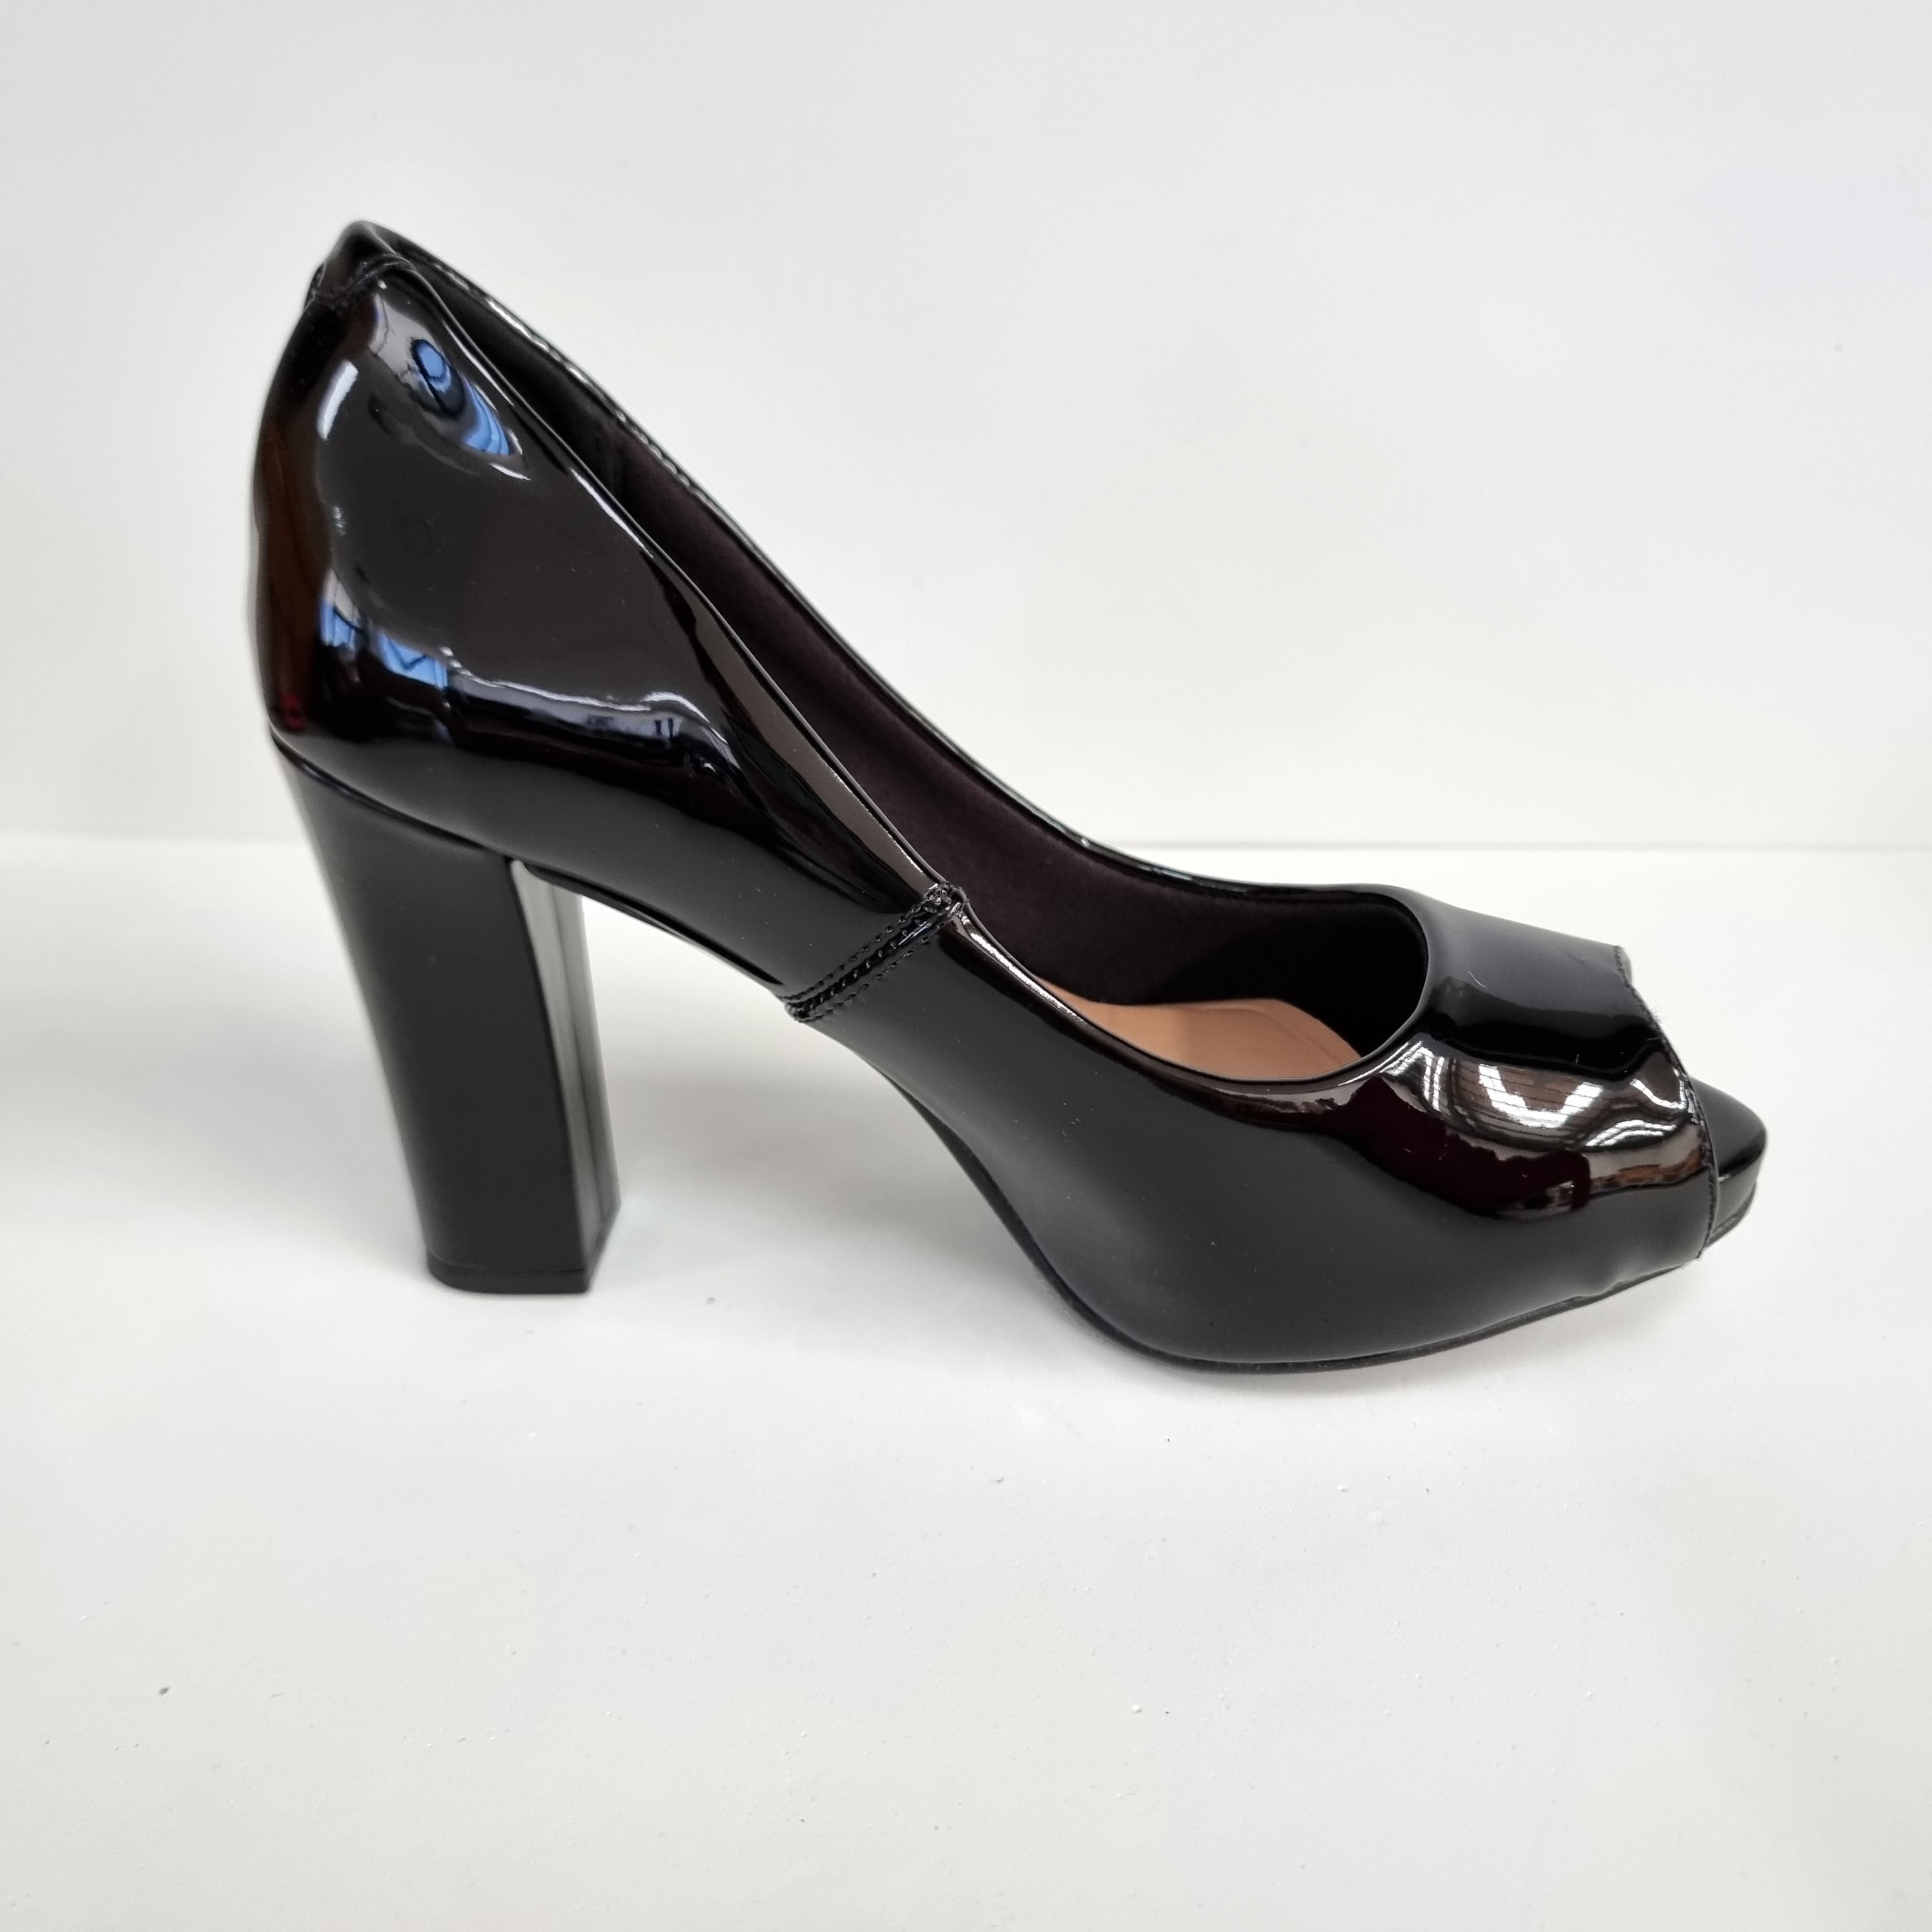 Beira Rio 4788-301 Peep Toe Heel Pump in Black Patent